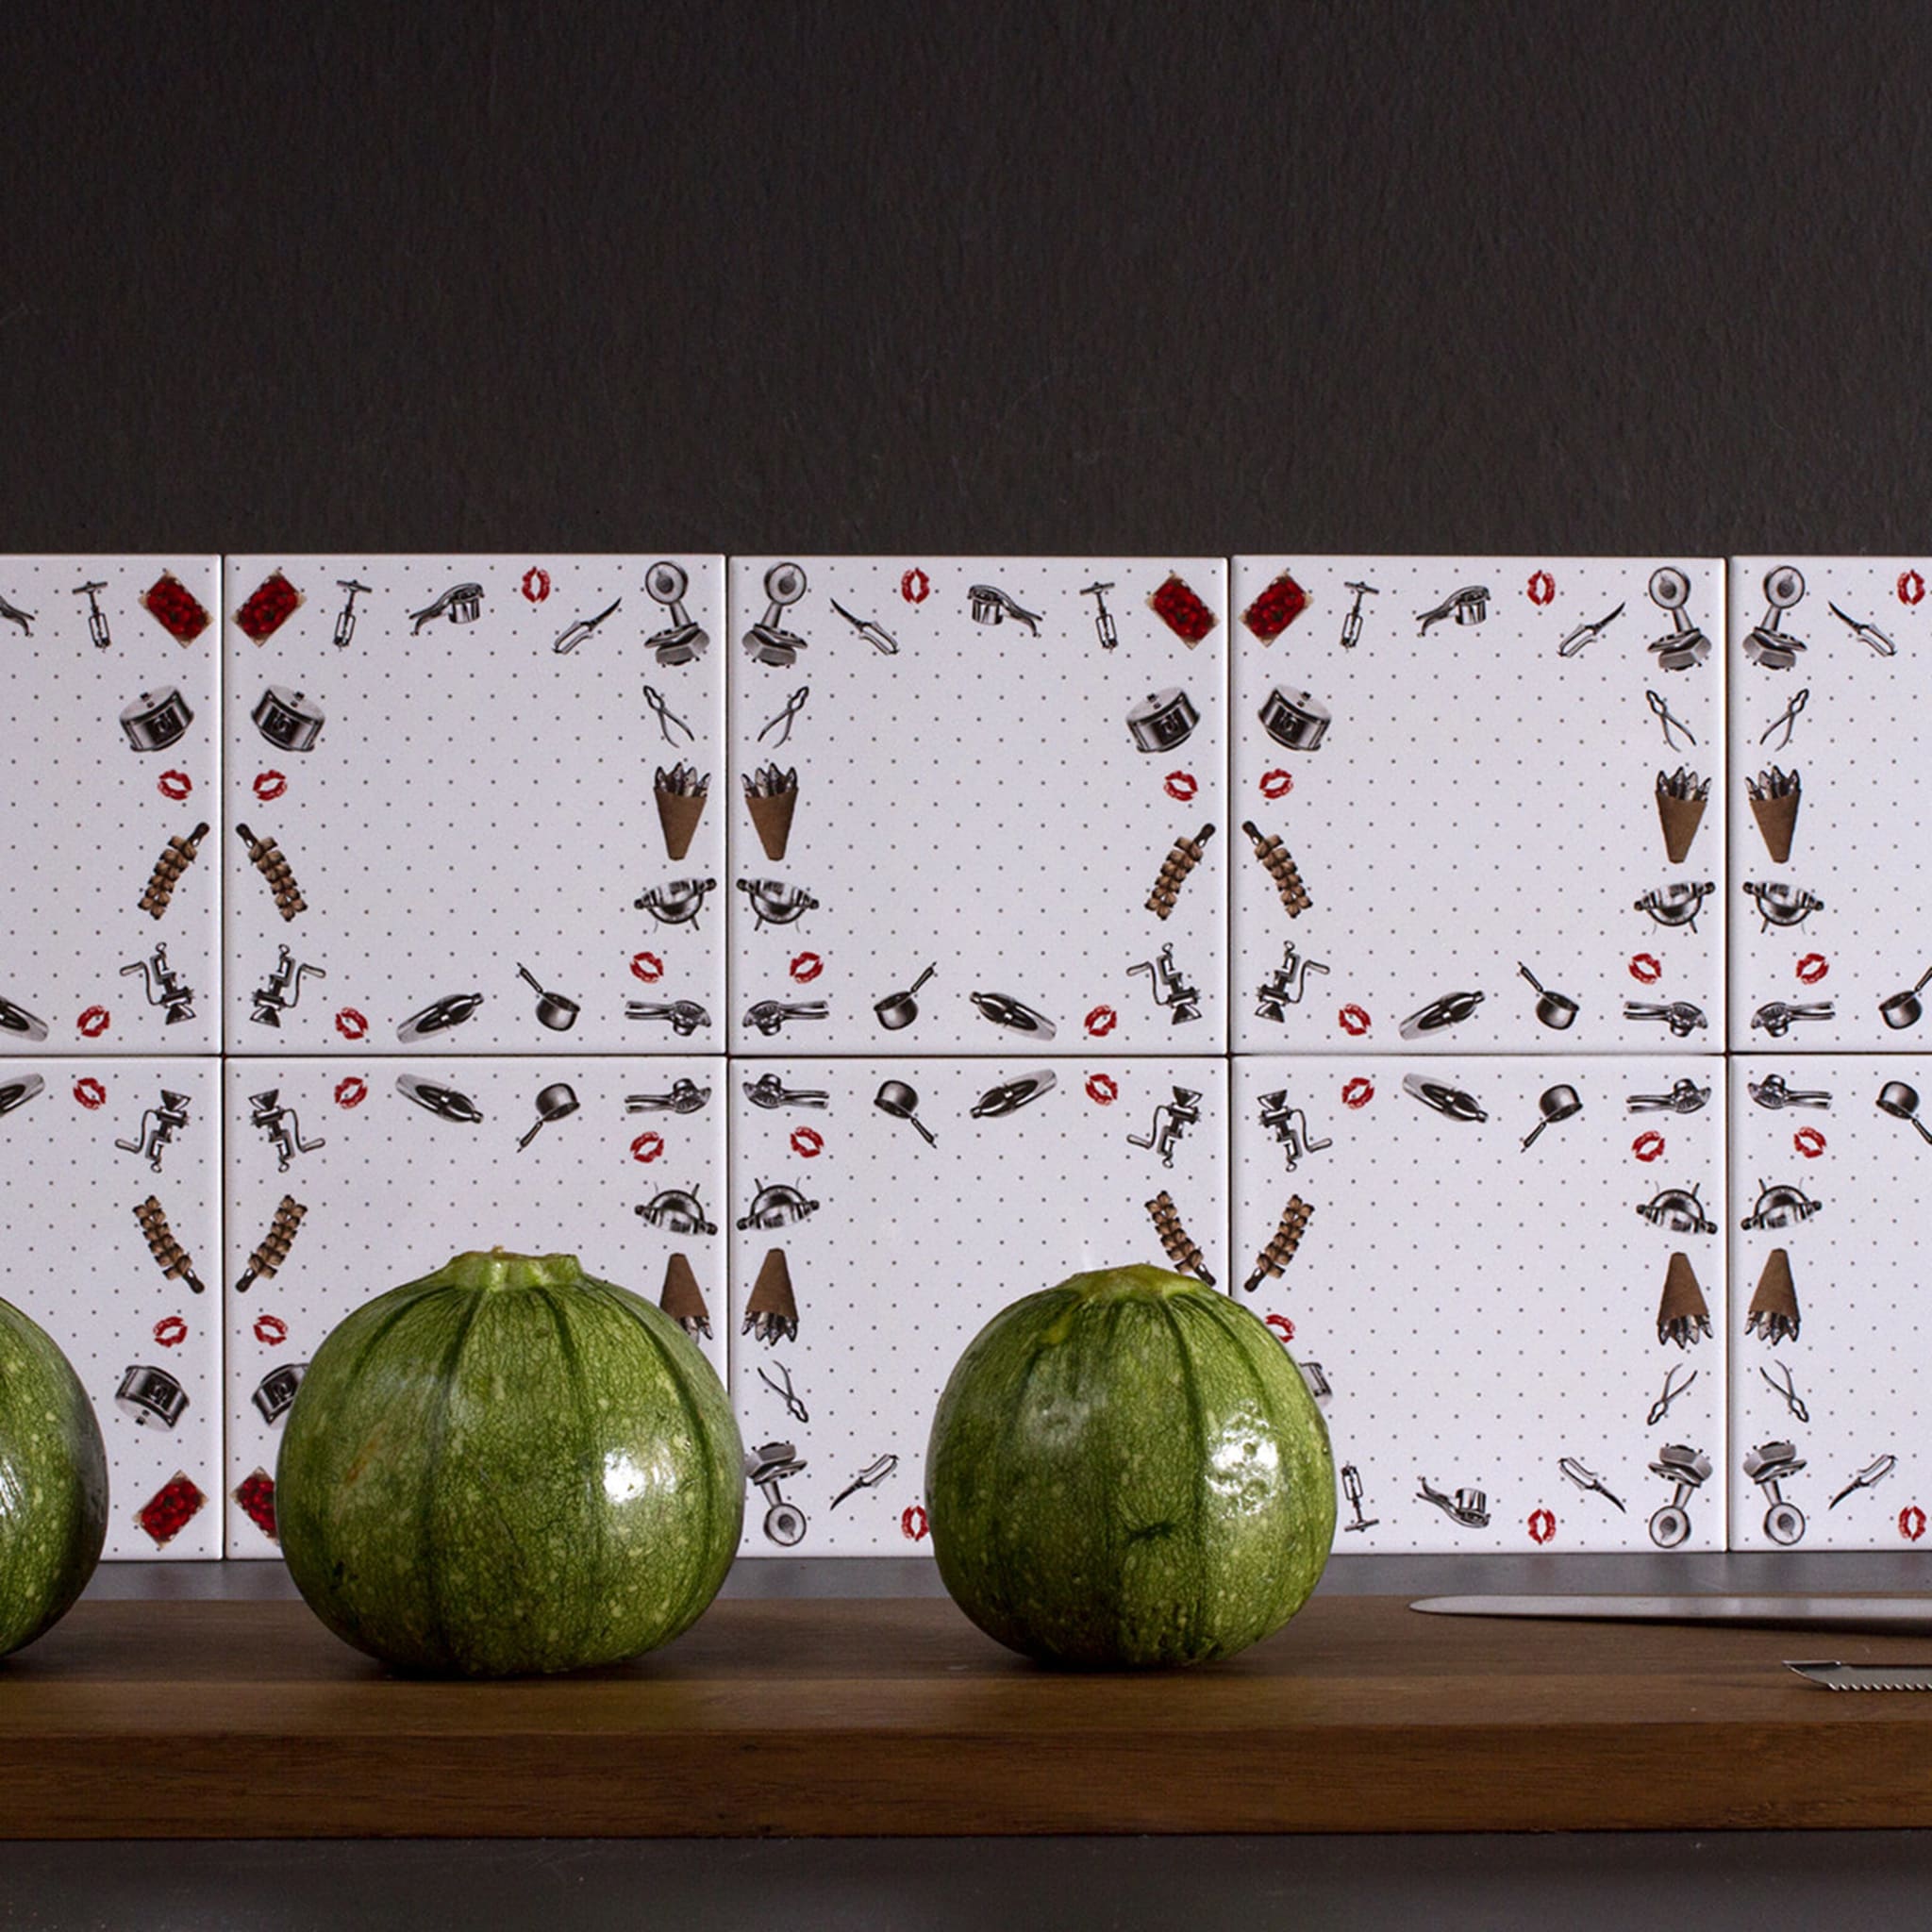 Set of 12 Cooker's Casalingo Polka Dot Wall Tiles  - Alternative view 1